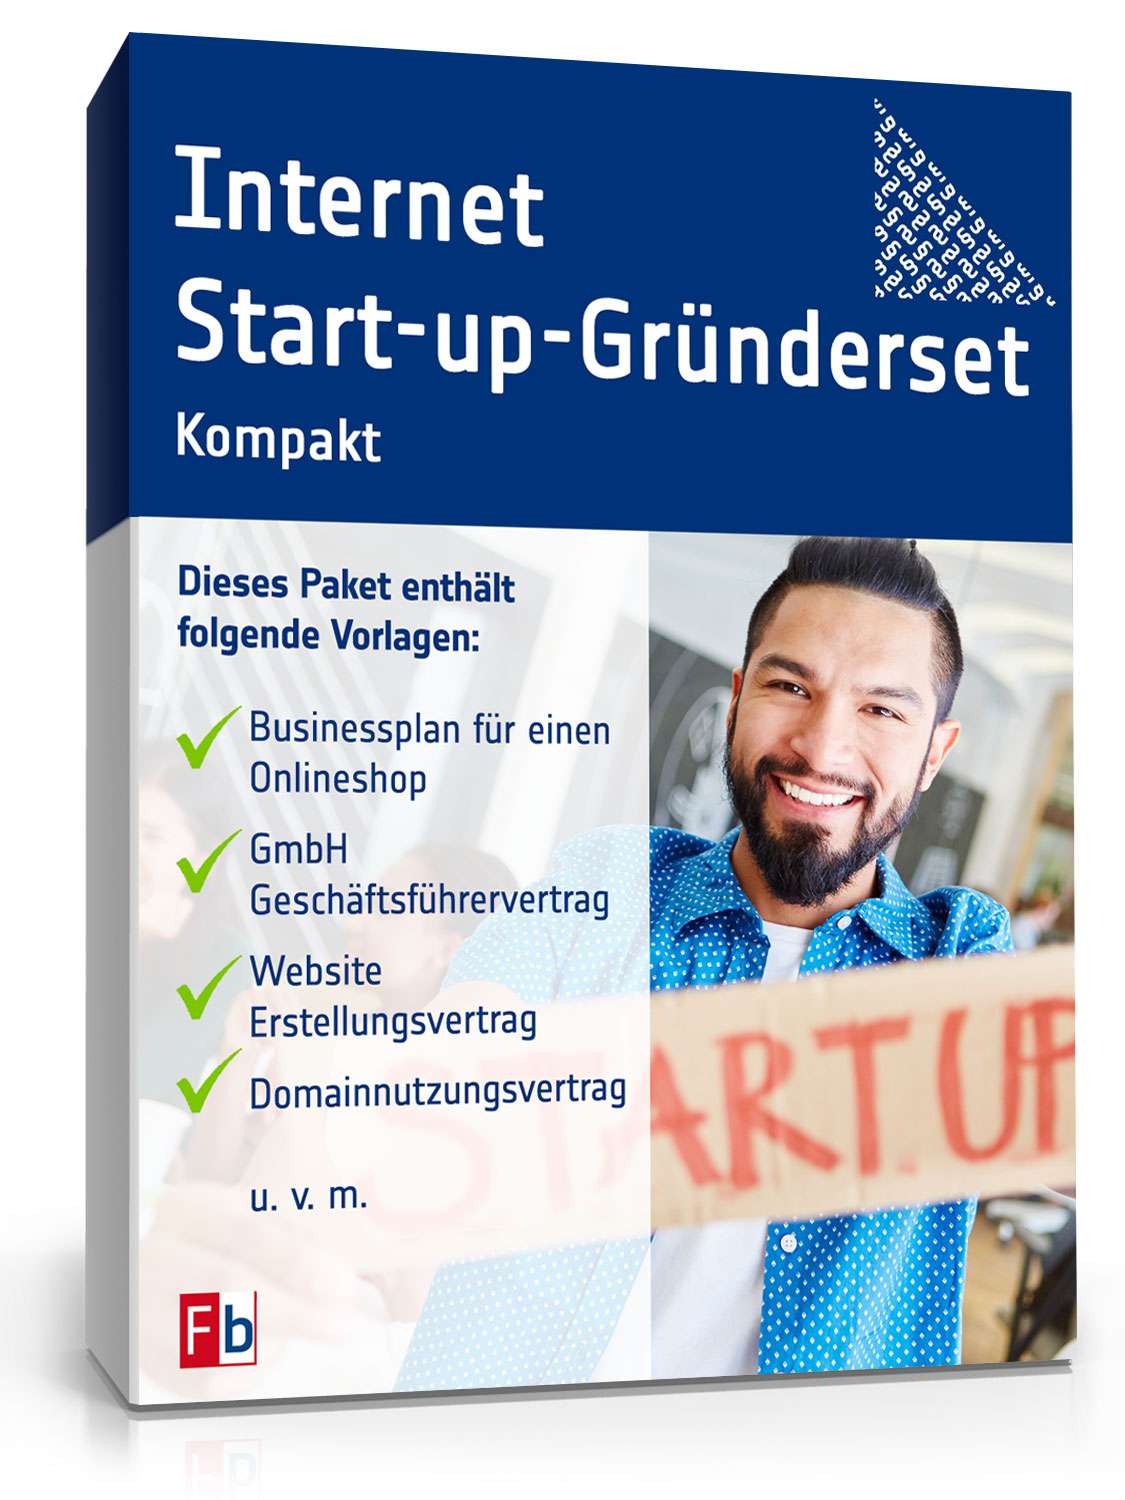 Hauptbild des Produkts: Internet-Start-up-Gründerset kompakt